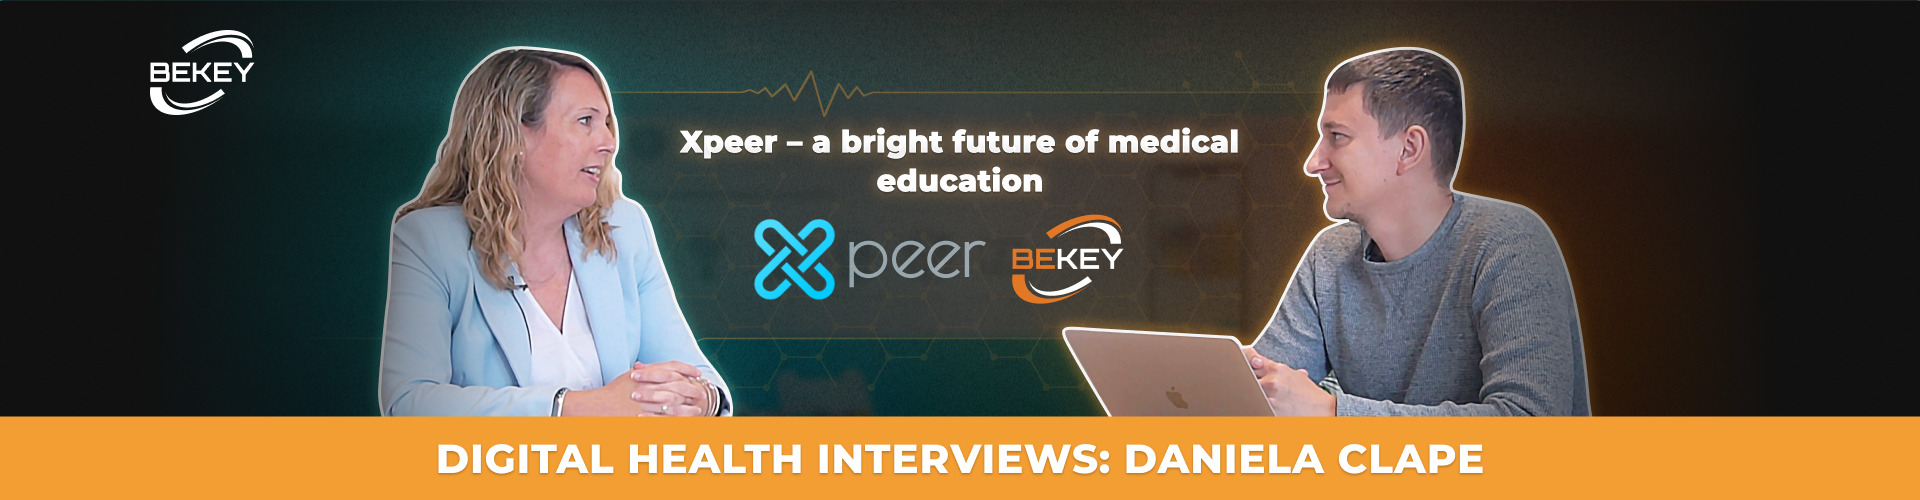 Xpeer — a Bright Future of Medical Education. Digital Health Interviews: Daniela Clape - image